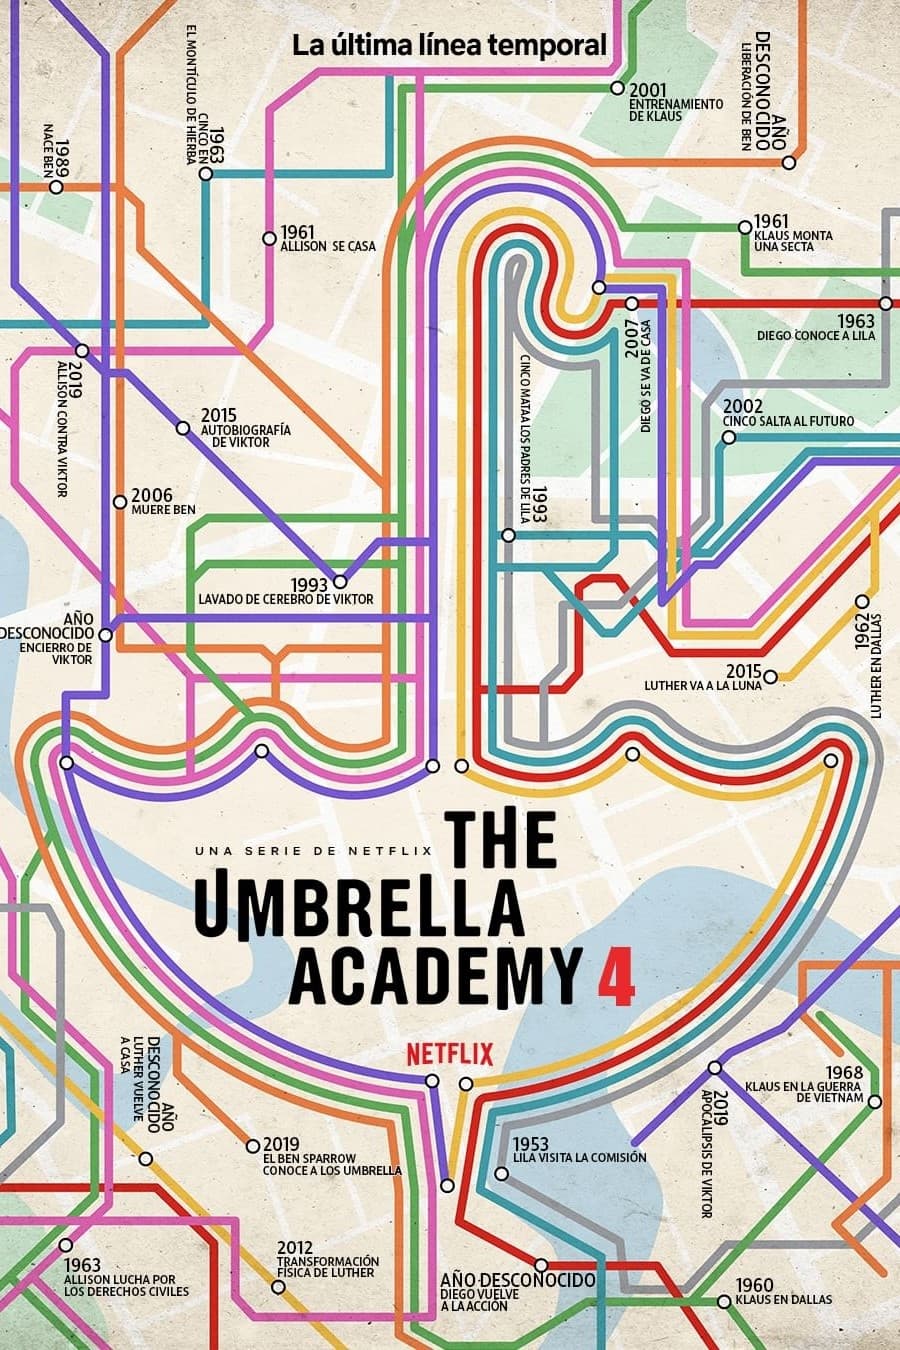 The Umbrella Academy